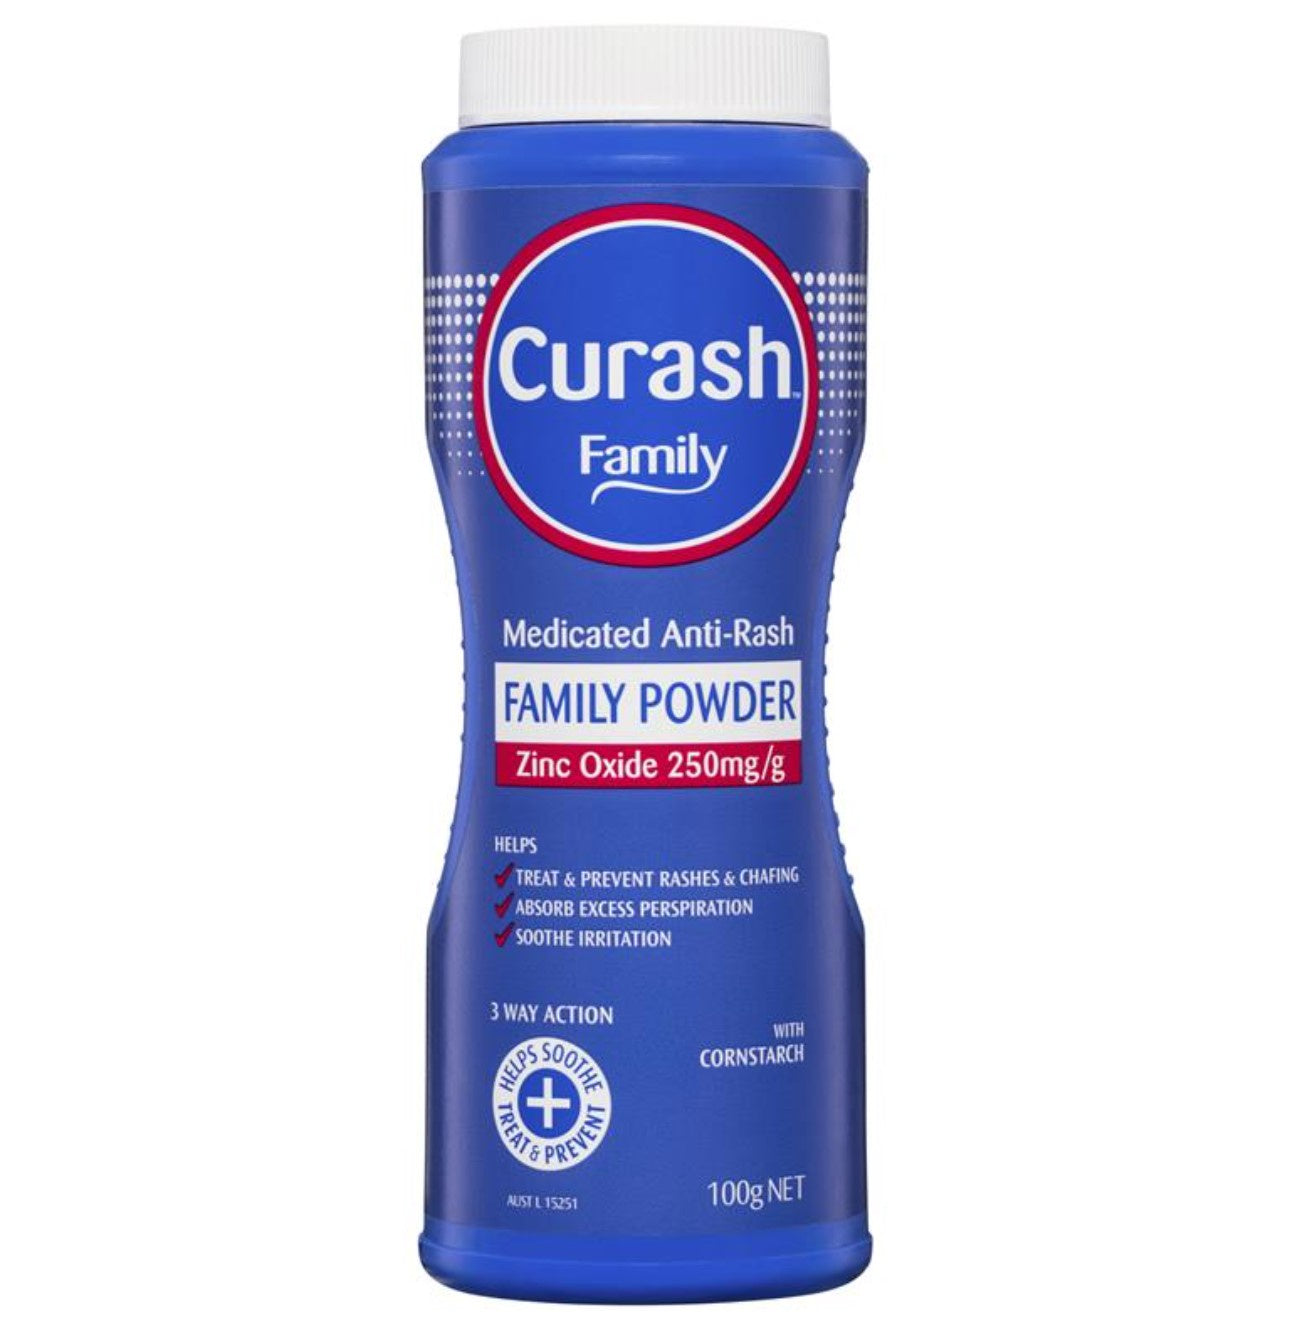 Curash Family Medicated Anti Rash Family Powder 100g